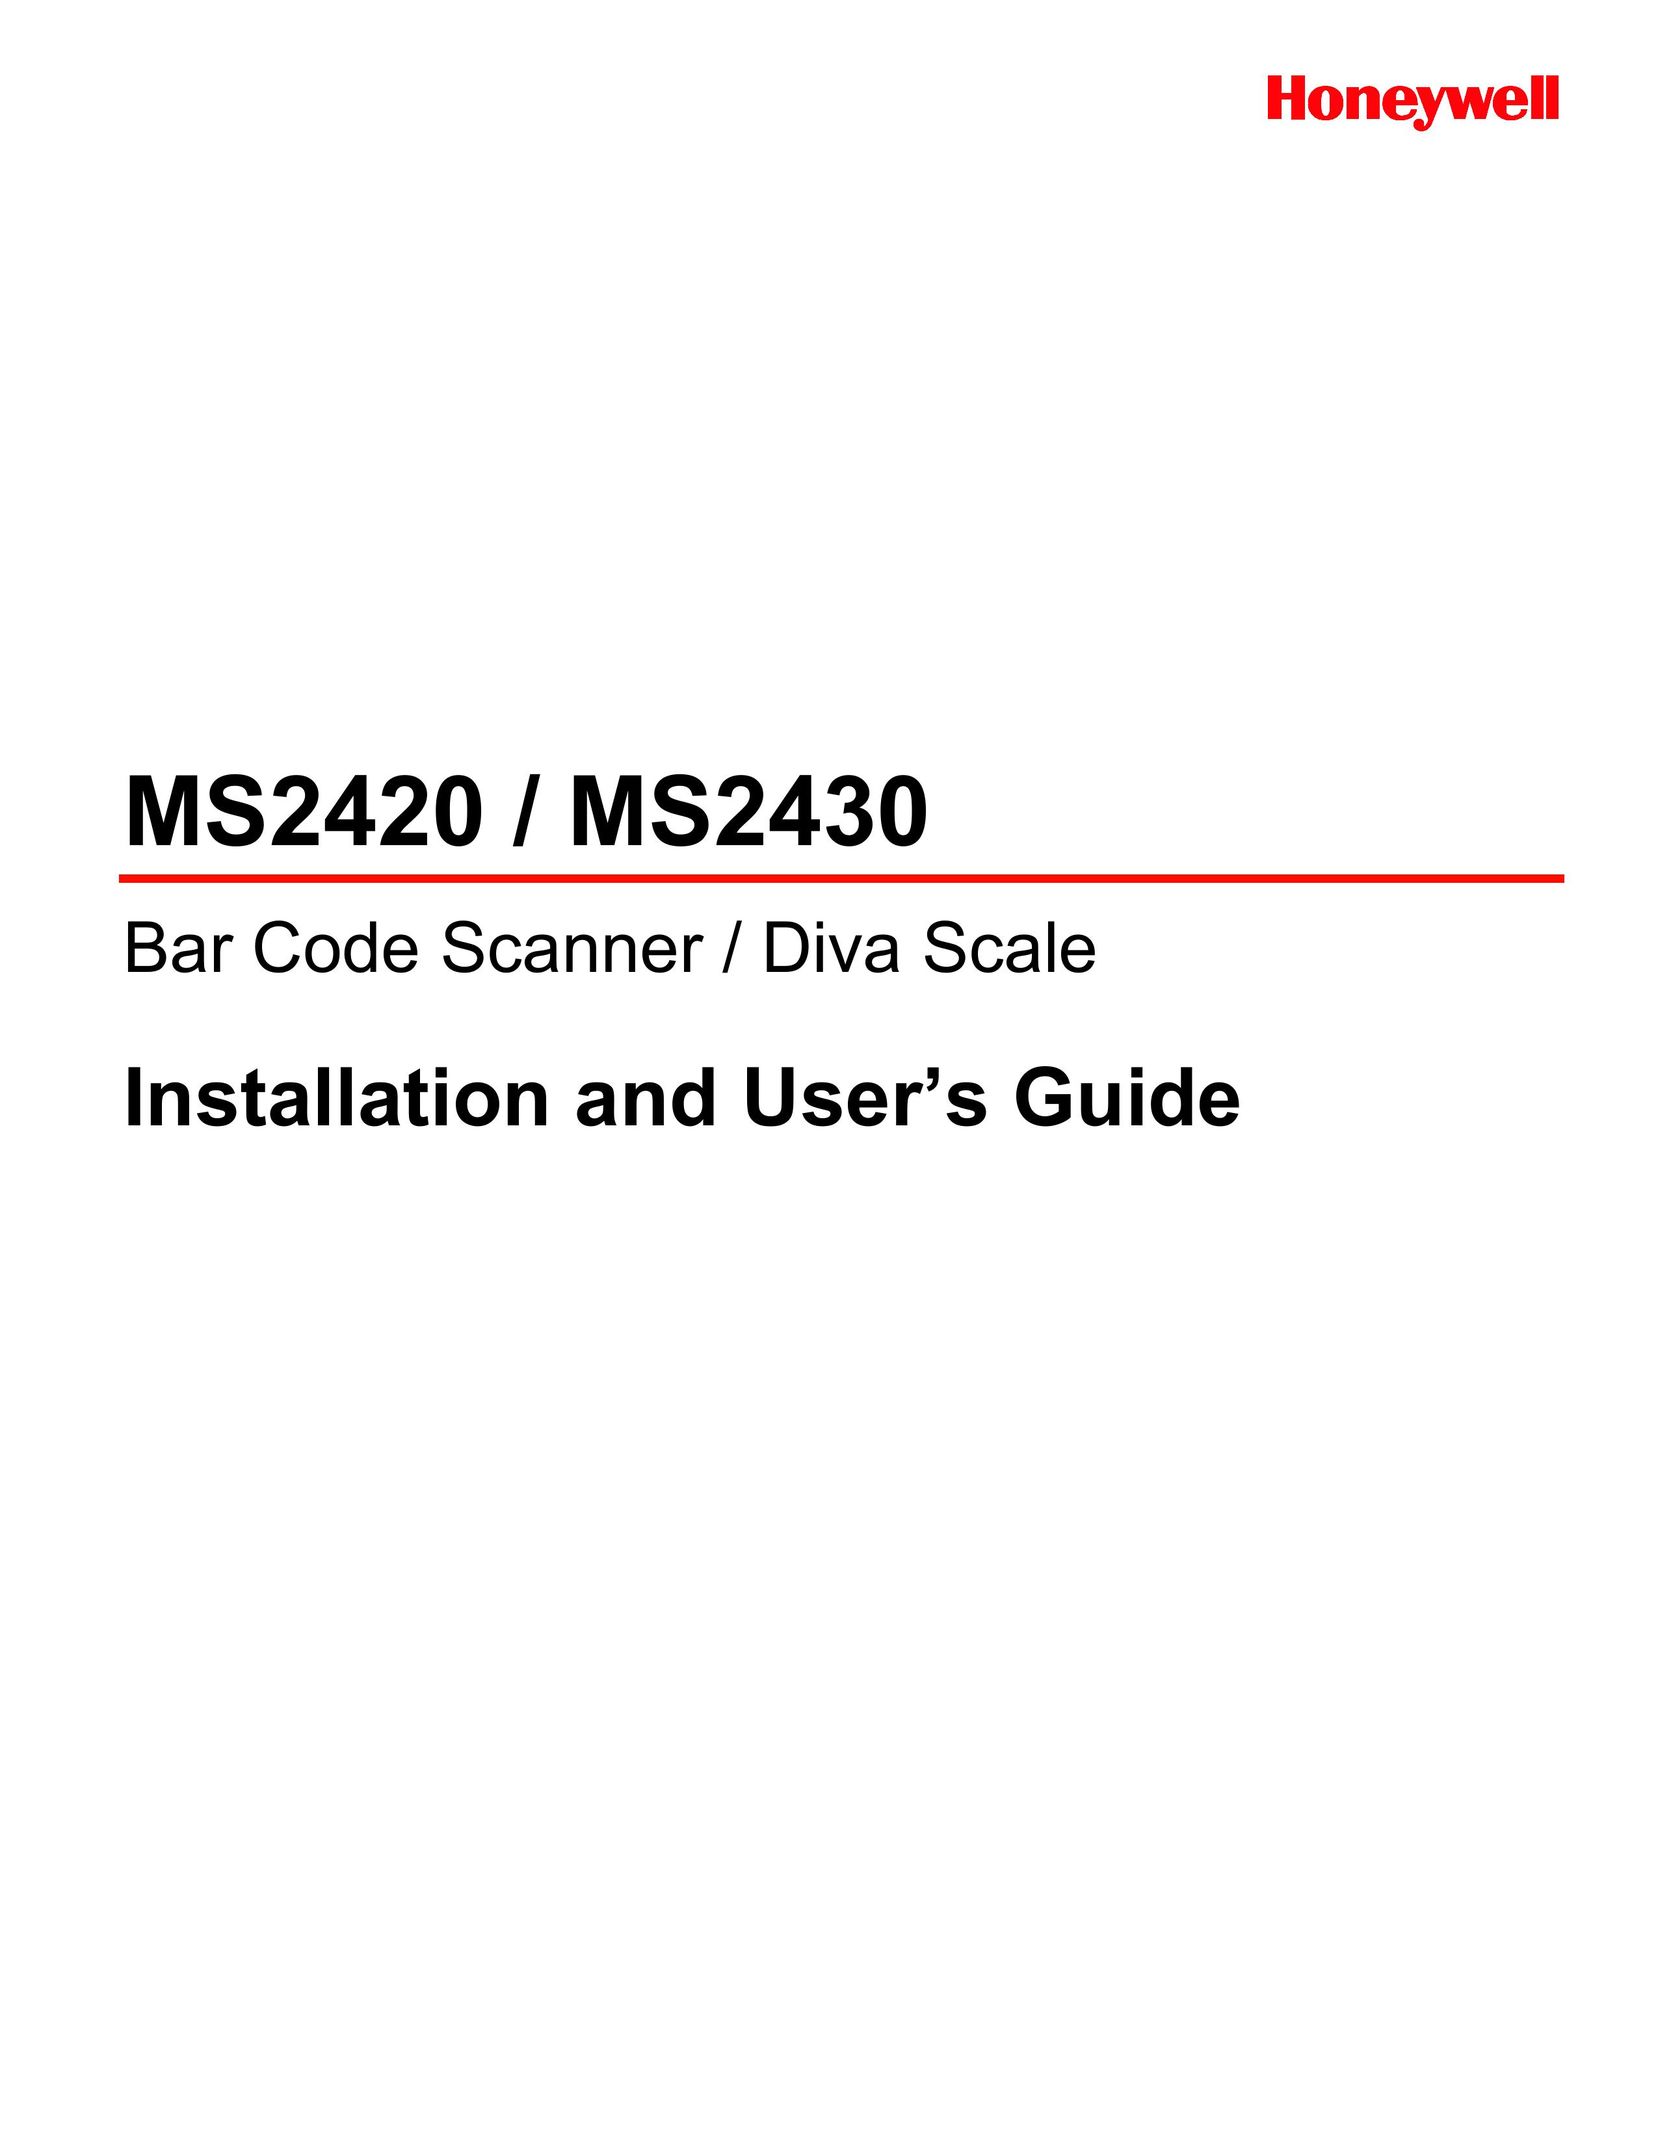 Honeywell MS2430 Barcode Reader User Manual